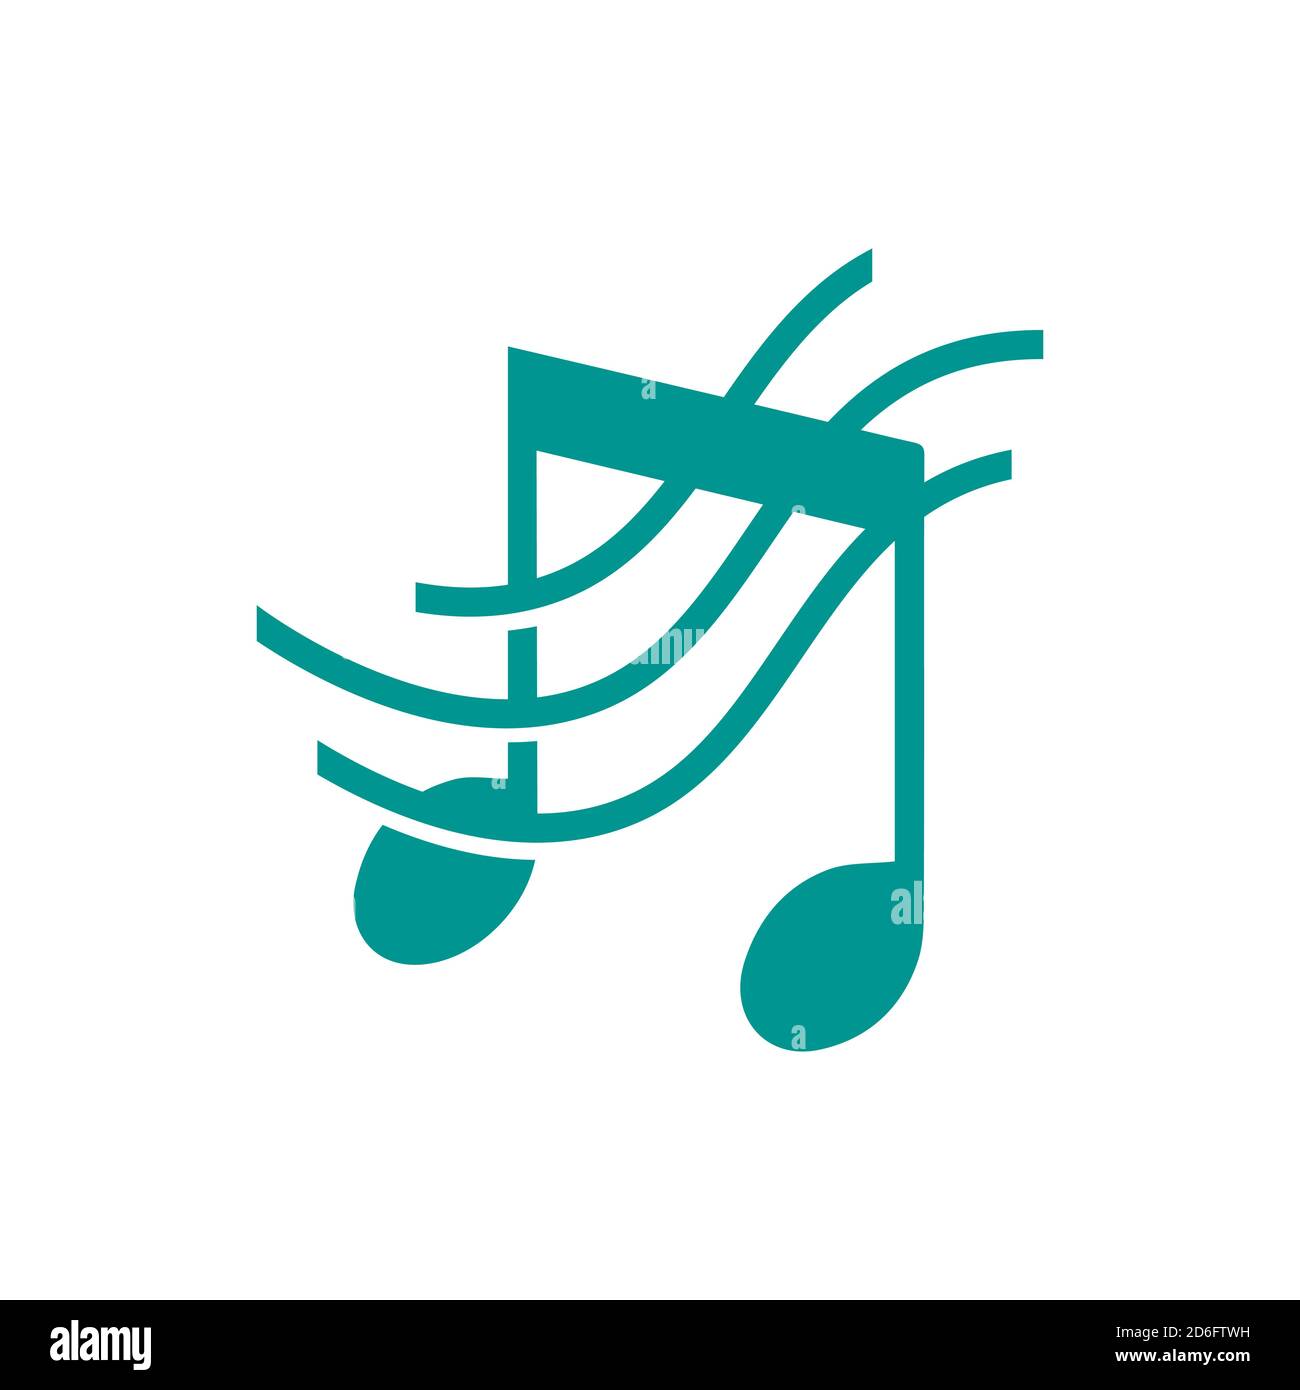 Music Note Logo